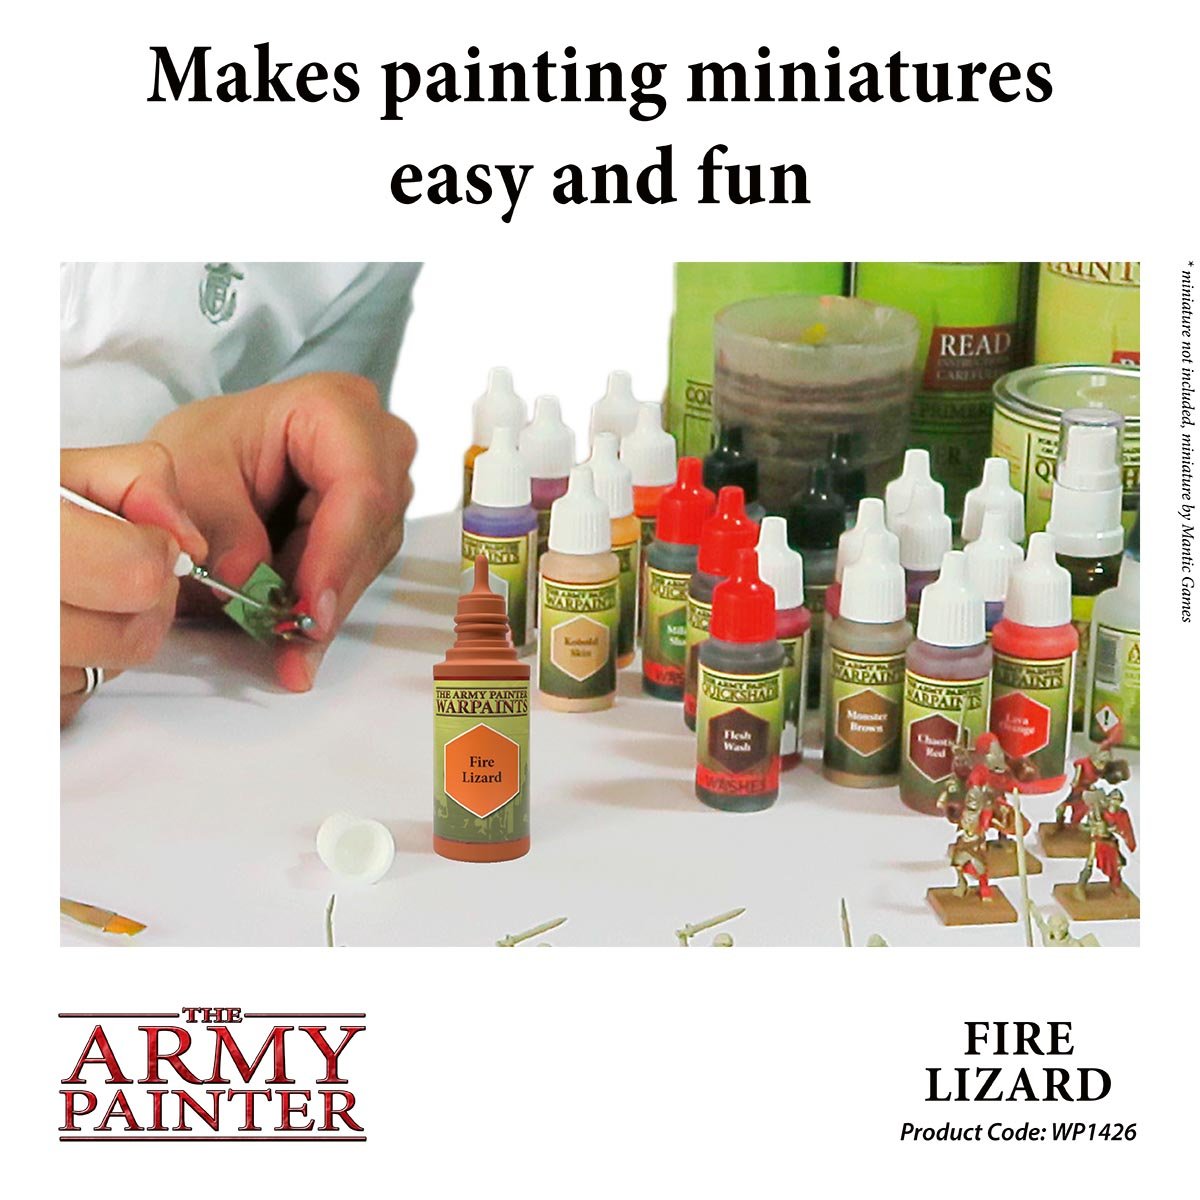 The Army Painter Warpaints WP1426 Fire Lizard Acrylic Paint 18ml bottle